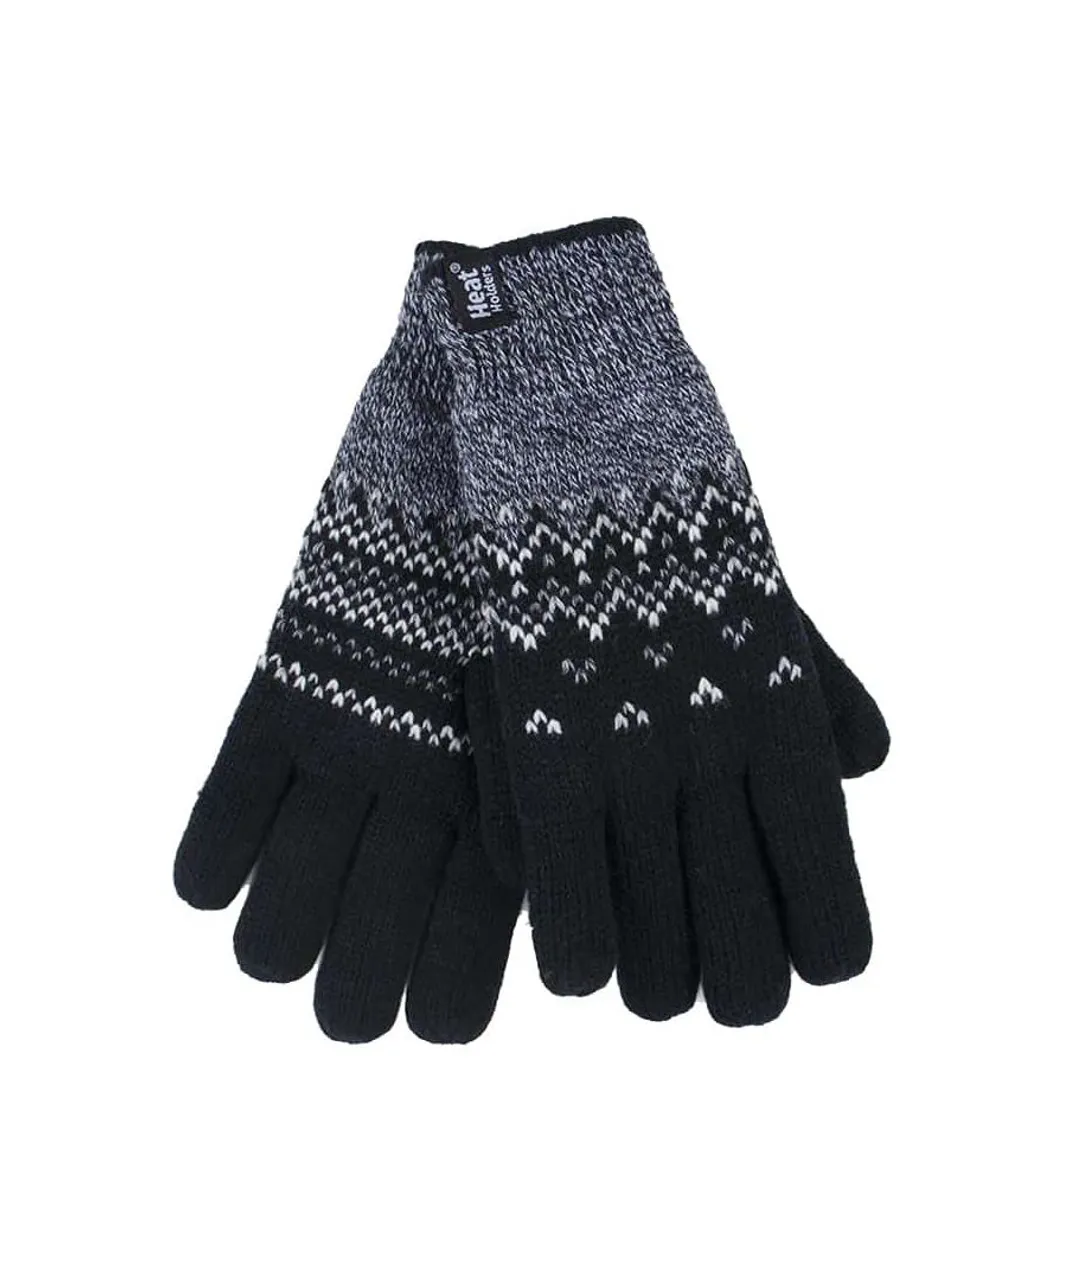 Heat Holders - Womens Nordic Fleece Lined Thermal Gloves - Black